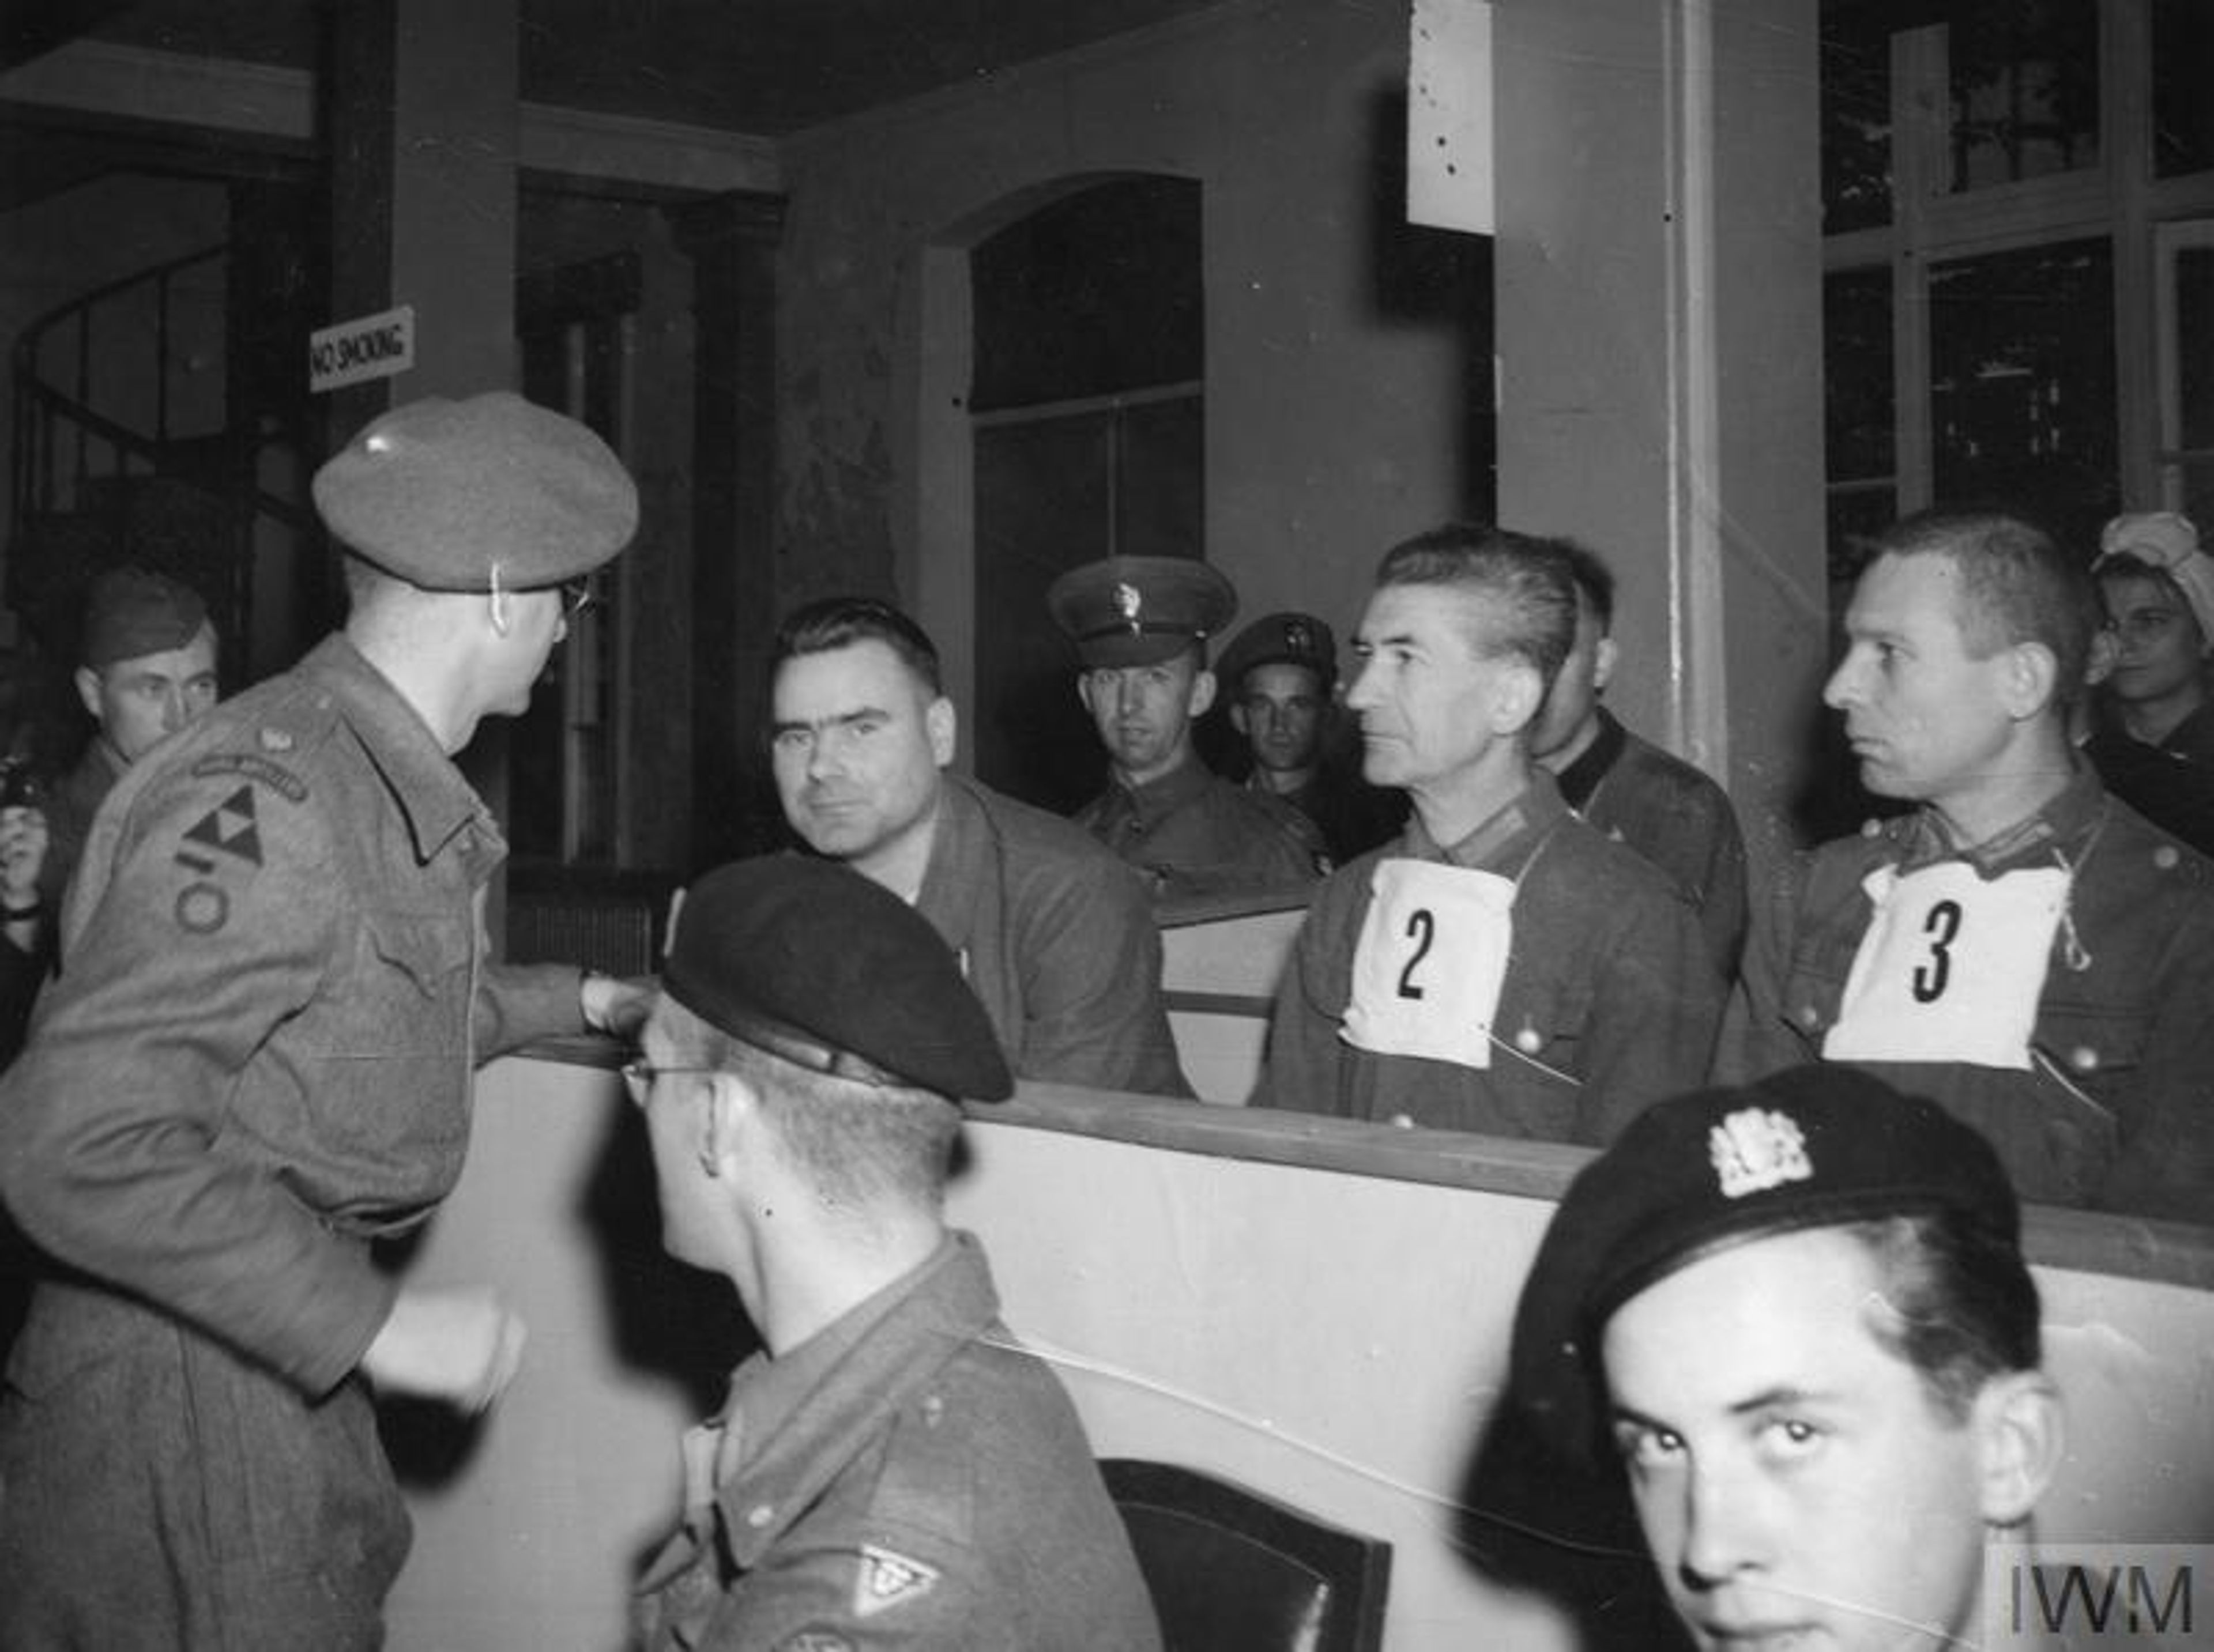 Tidligere kommandant i Bergen Belsen, Josef Kramer, sammen med Fritz Klein, i retten i Luneburg 19.8.1945.